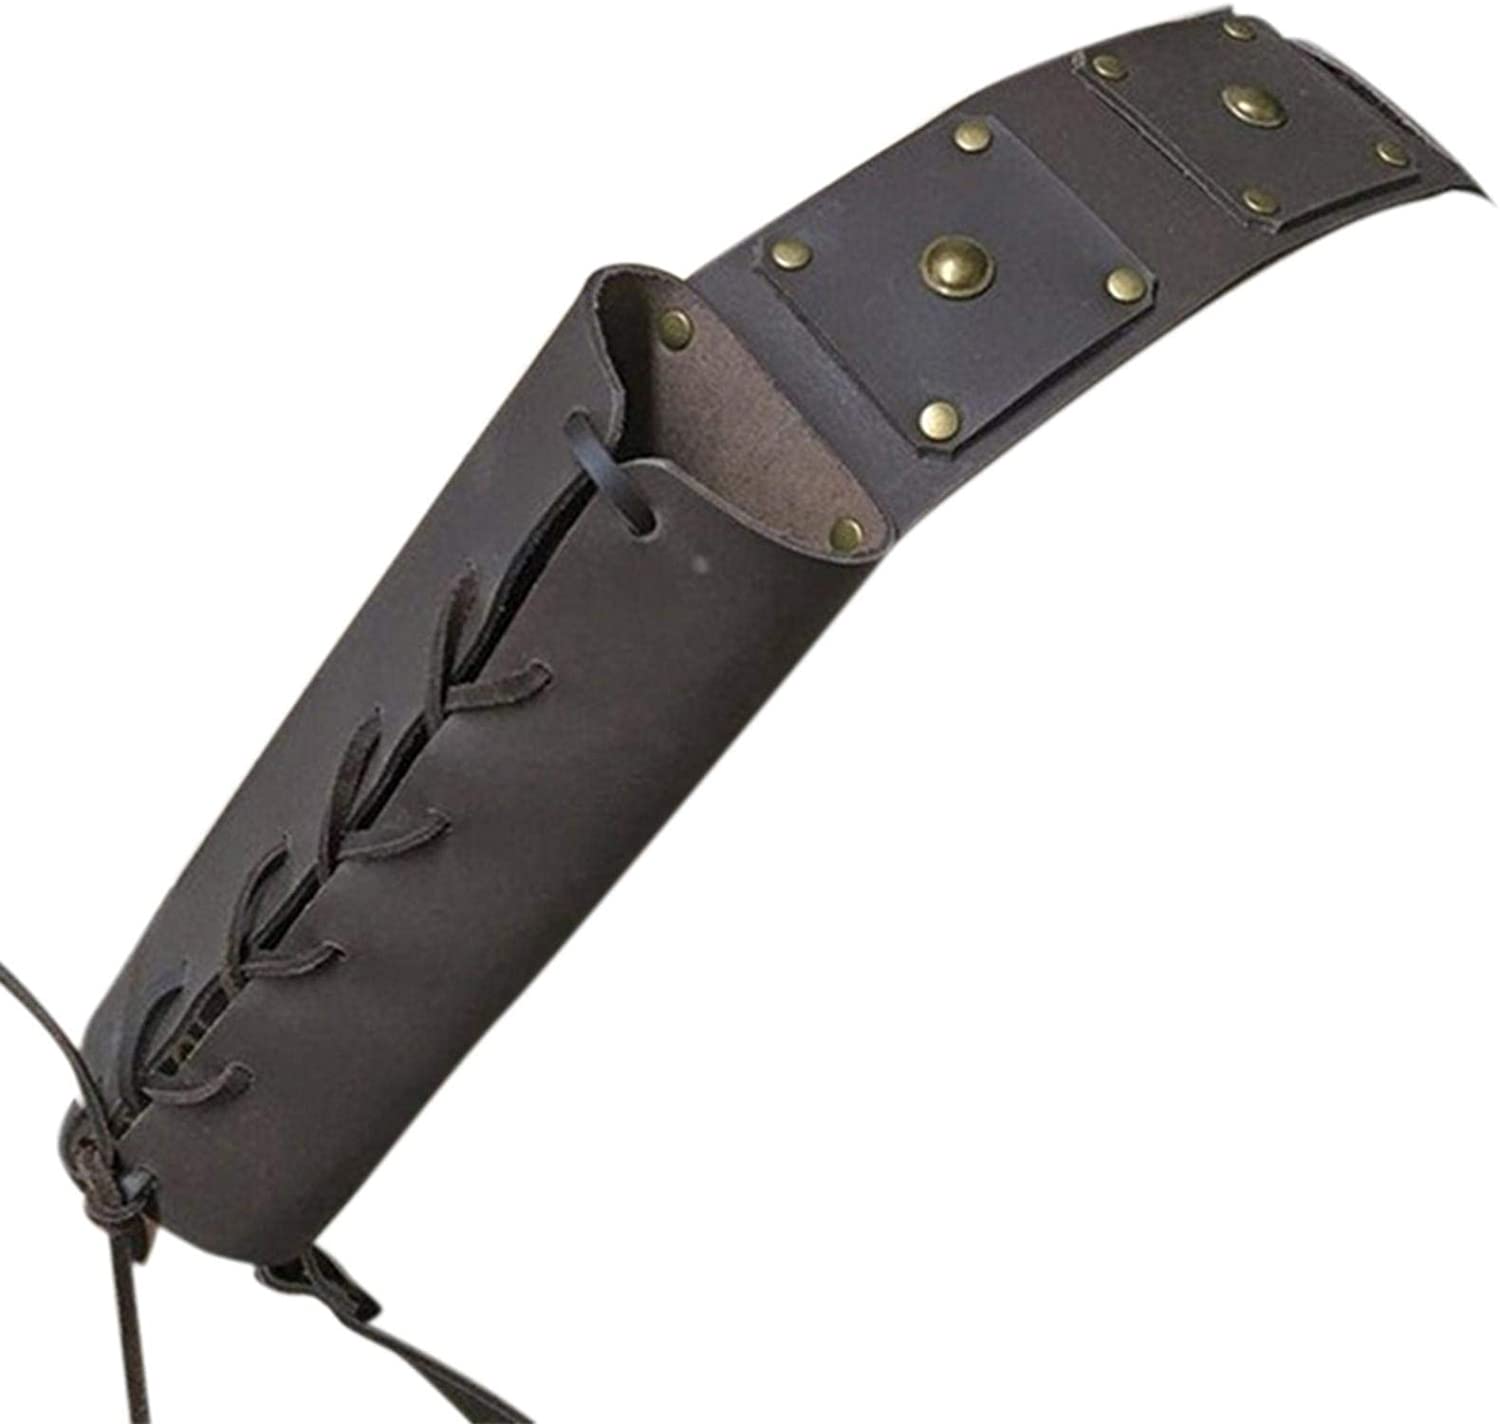 Medieval Retro Warrior Leather Holster Sword Holder